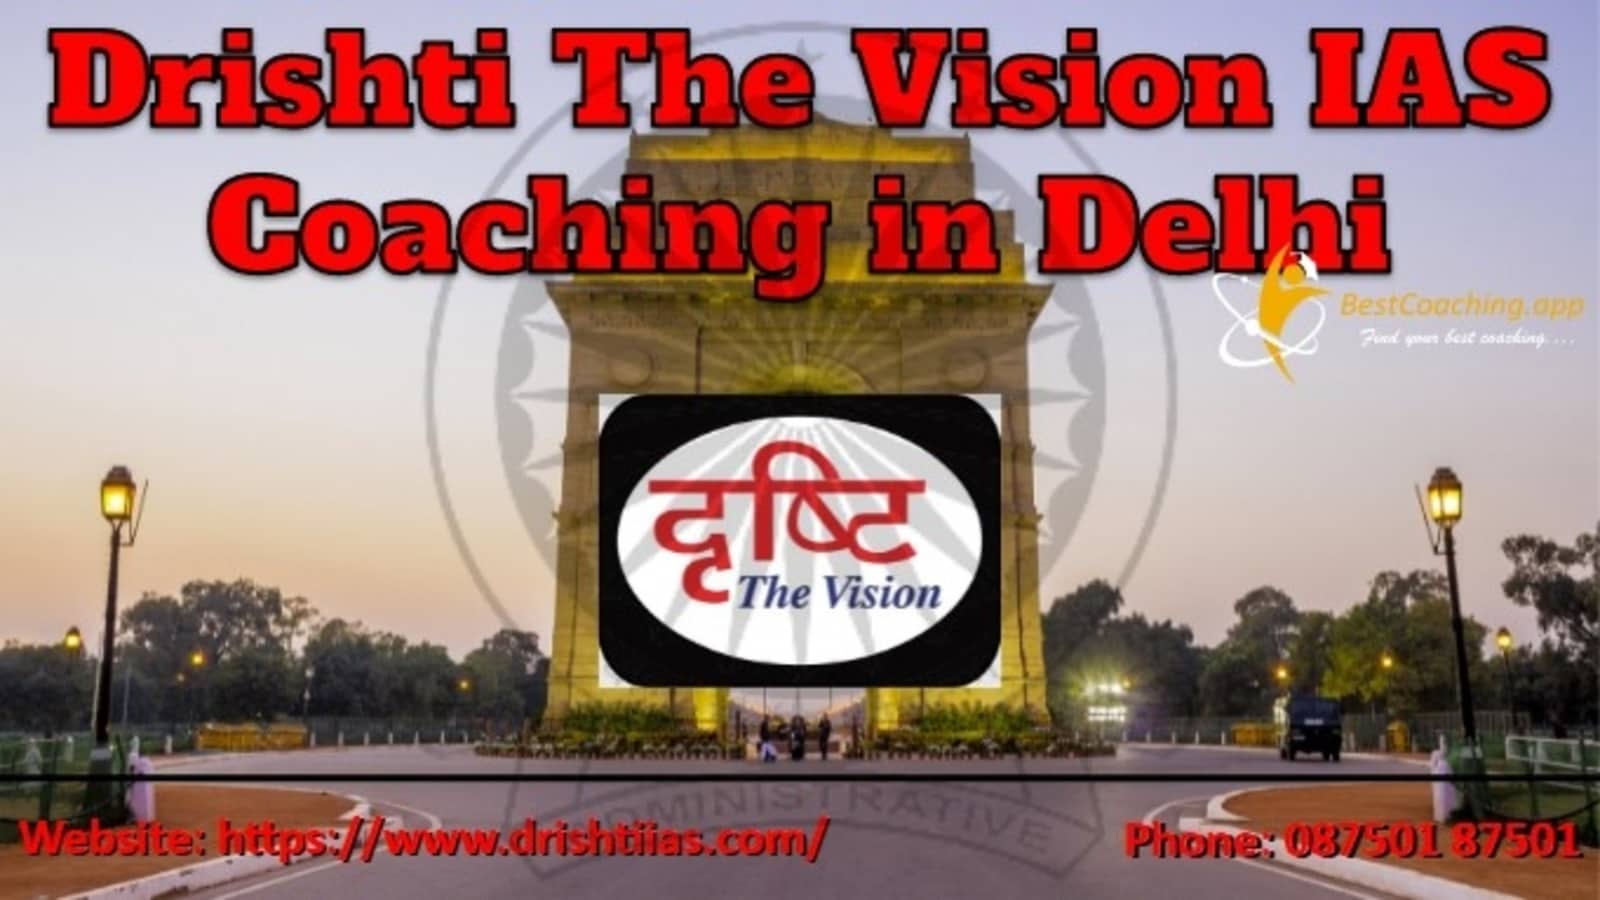 Drishti The Vision IAS Coaching in Delhi